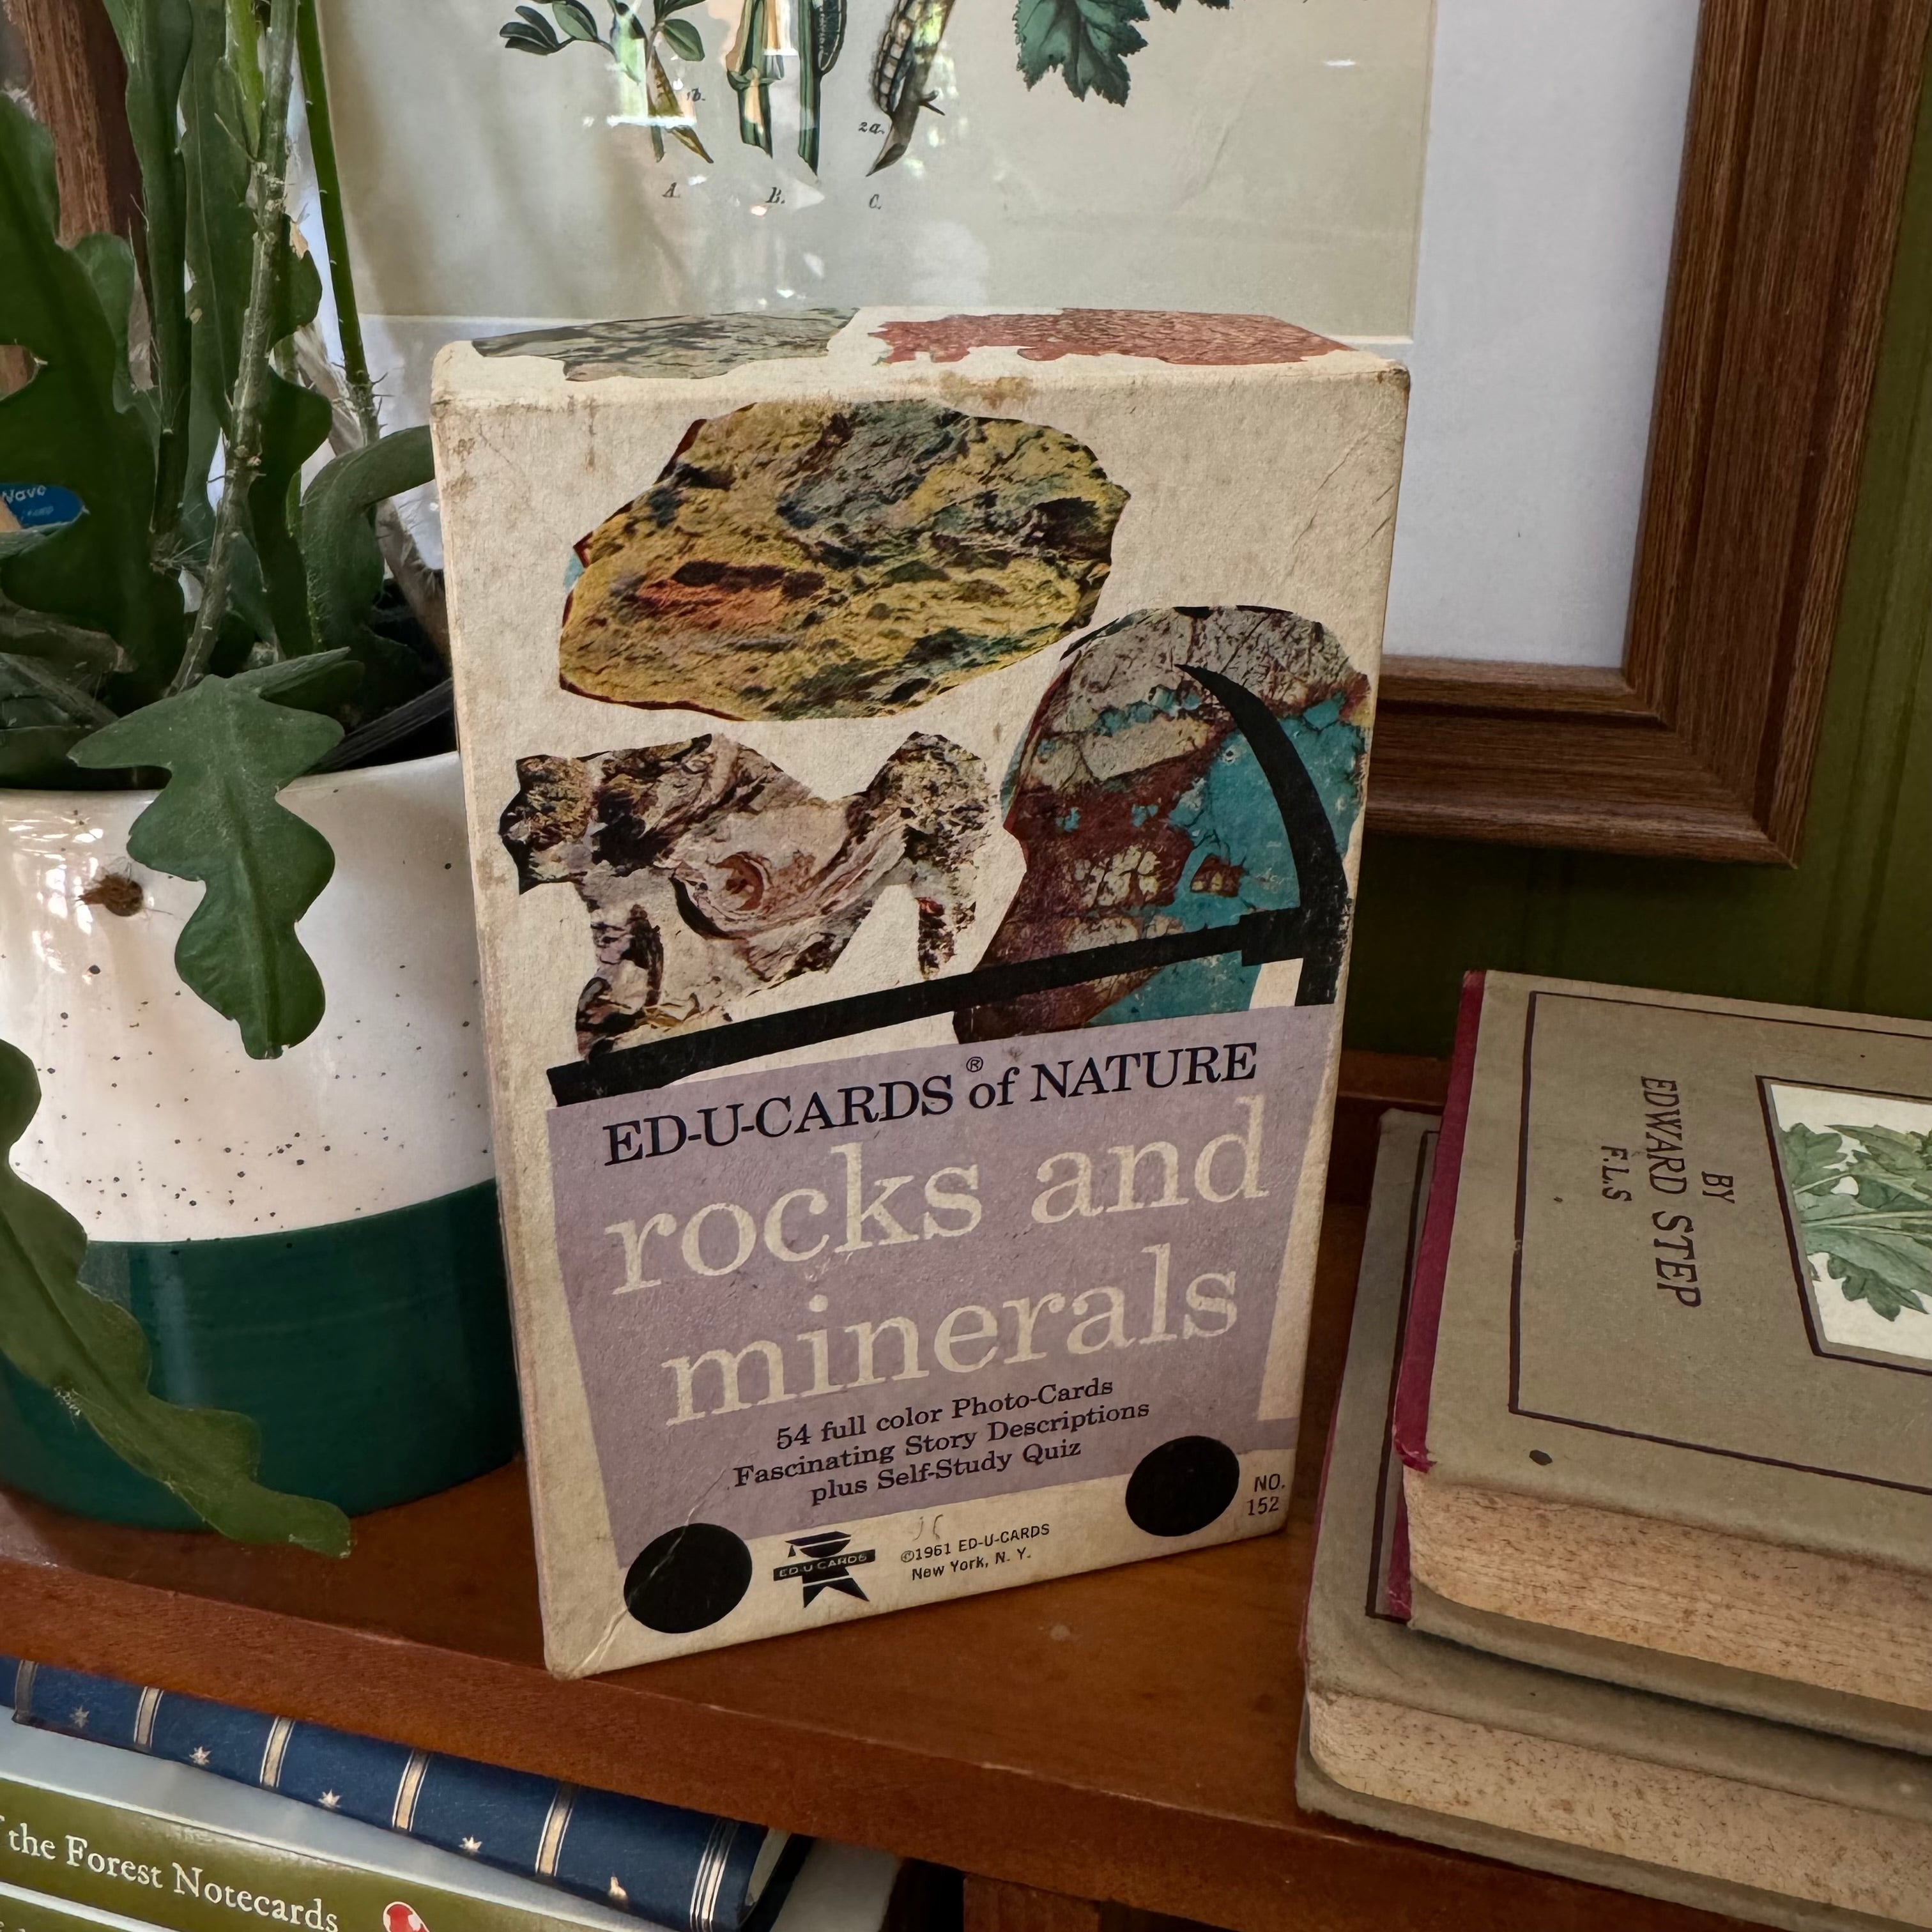 Ed-U-Cards of Nature: Rocks & Minerals